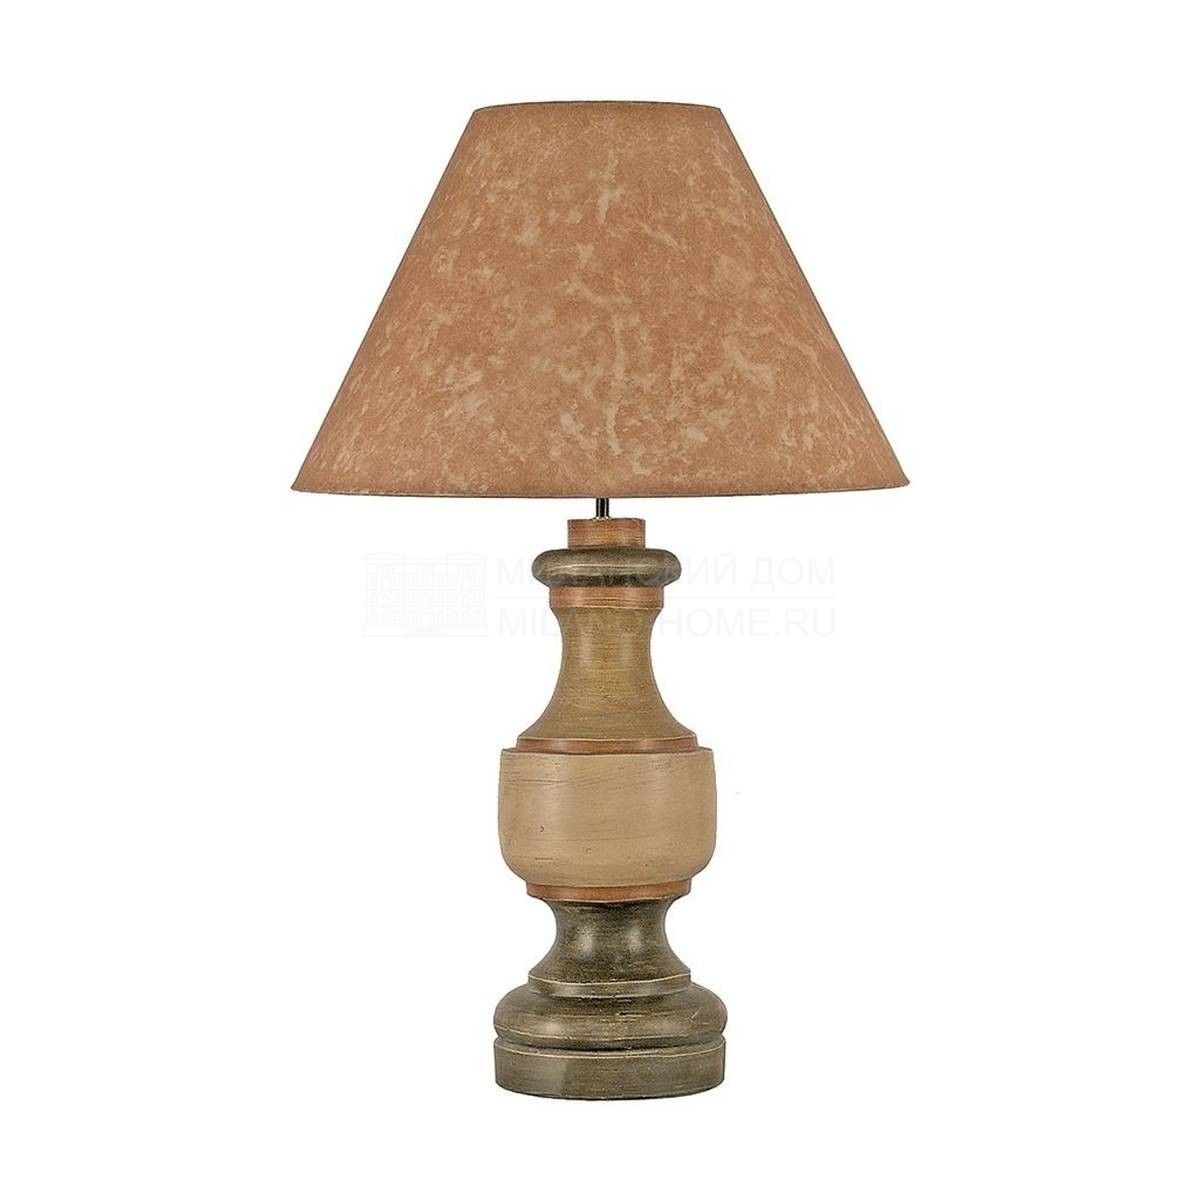 Настольная лампа 709 table lamp из Испании фабрики GUADARTE